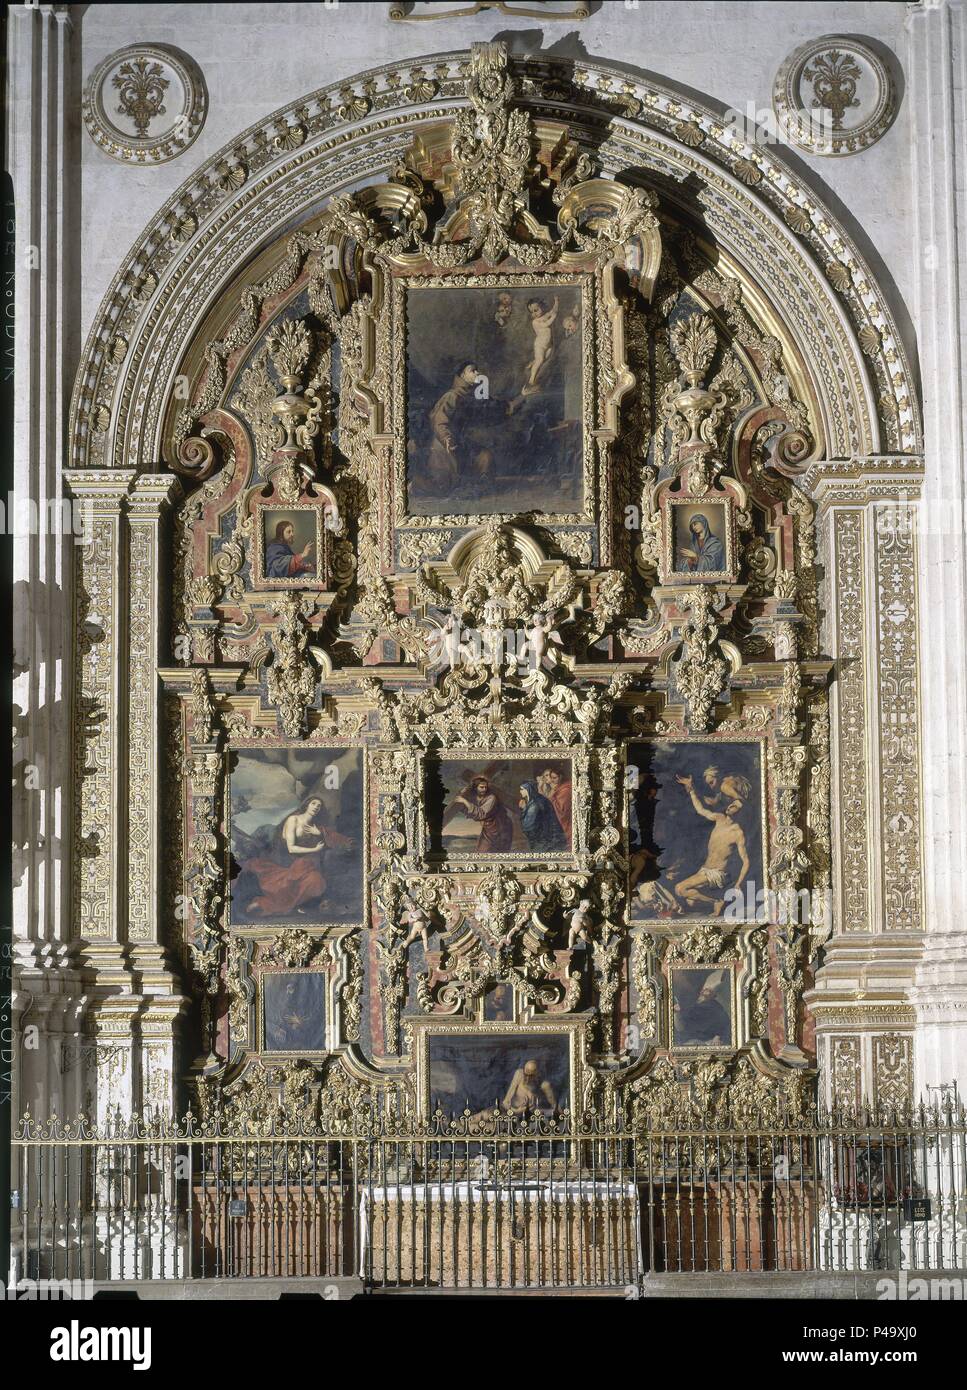 CAPILLA DE JESUS NAZARENO - retablo. Autor: Alonso Cano (1601-1667). Lage: CATEDRAL - INTERIEUR, Granada, Spanien. Stockfoto